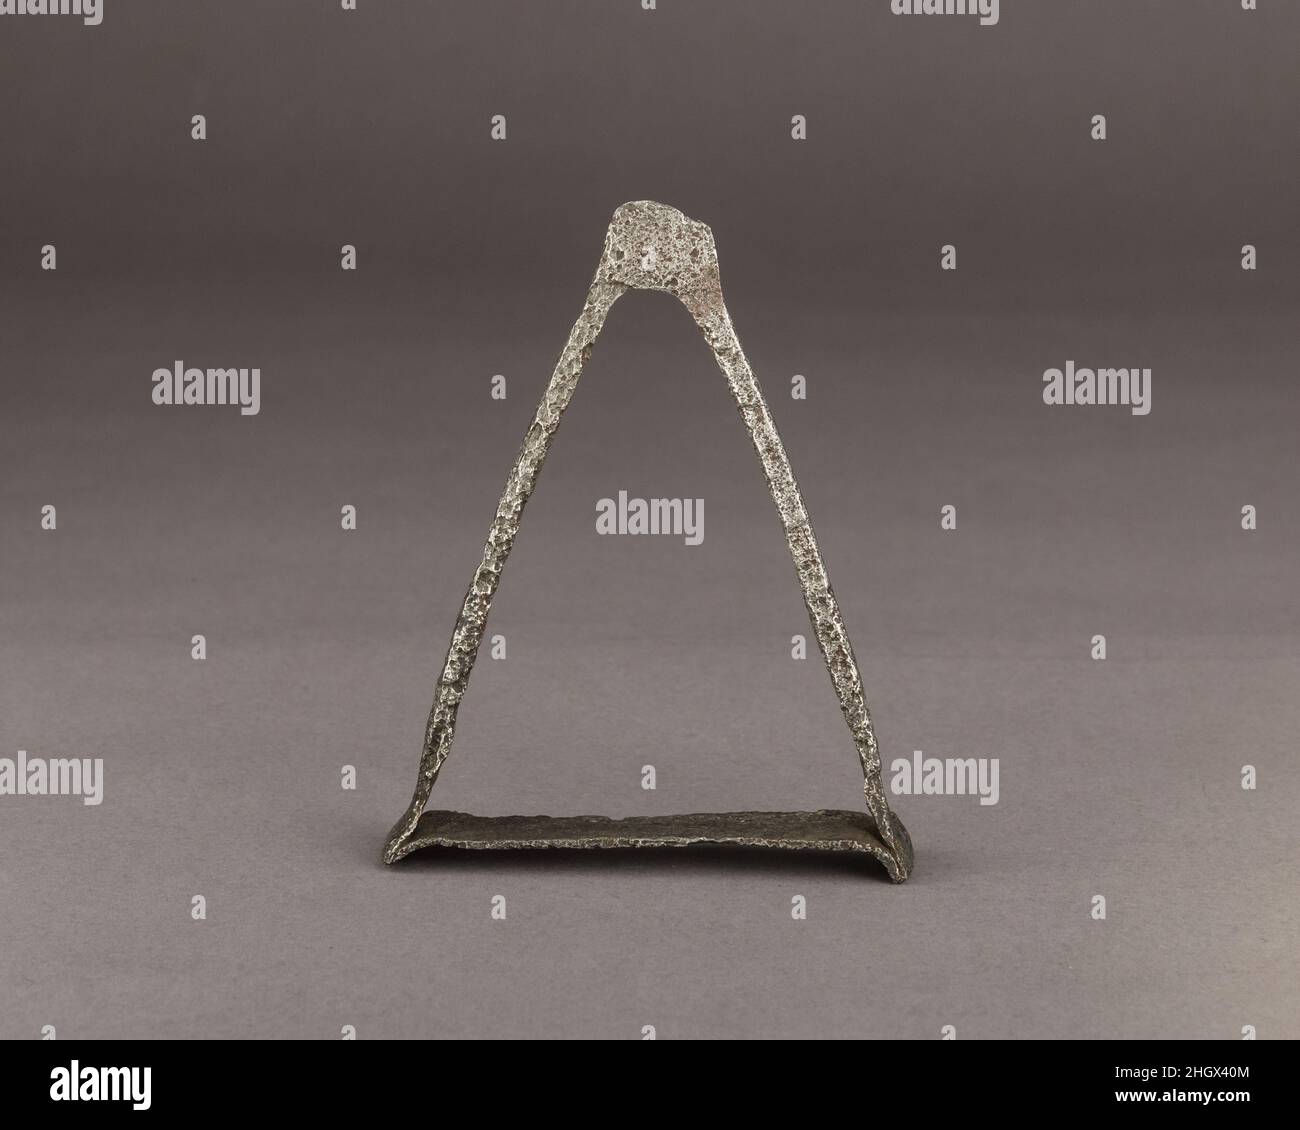 Sti triangular hi-res stock photography and images - Alamy